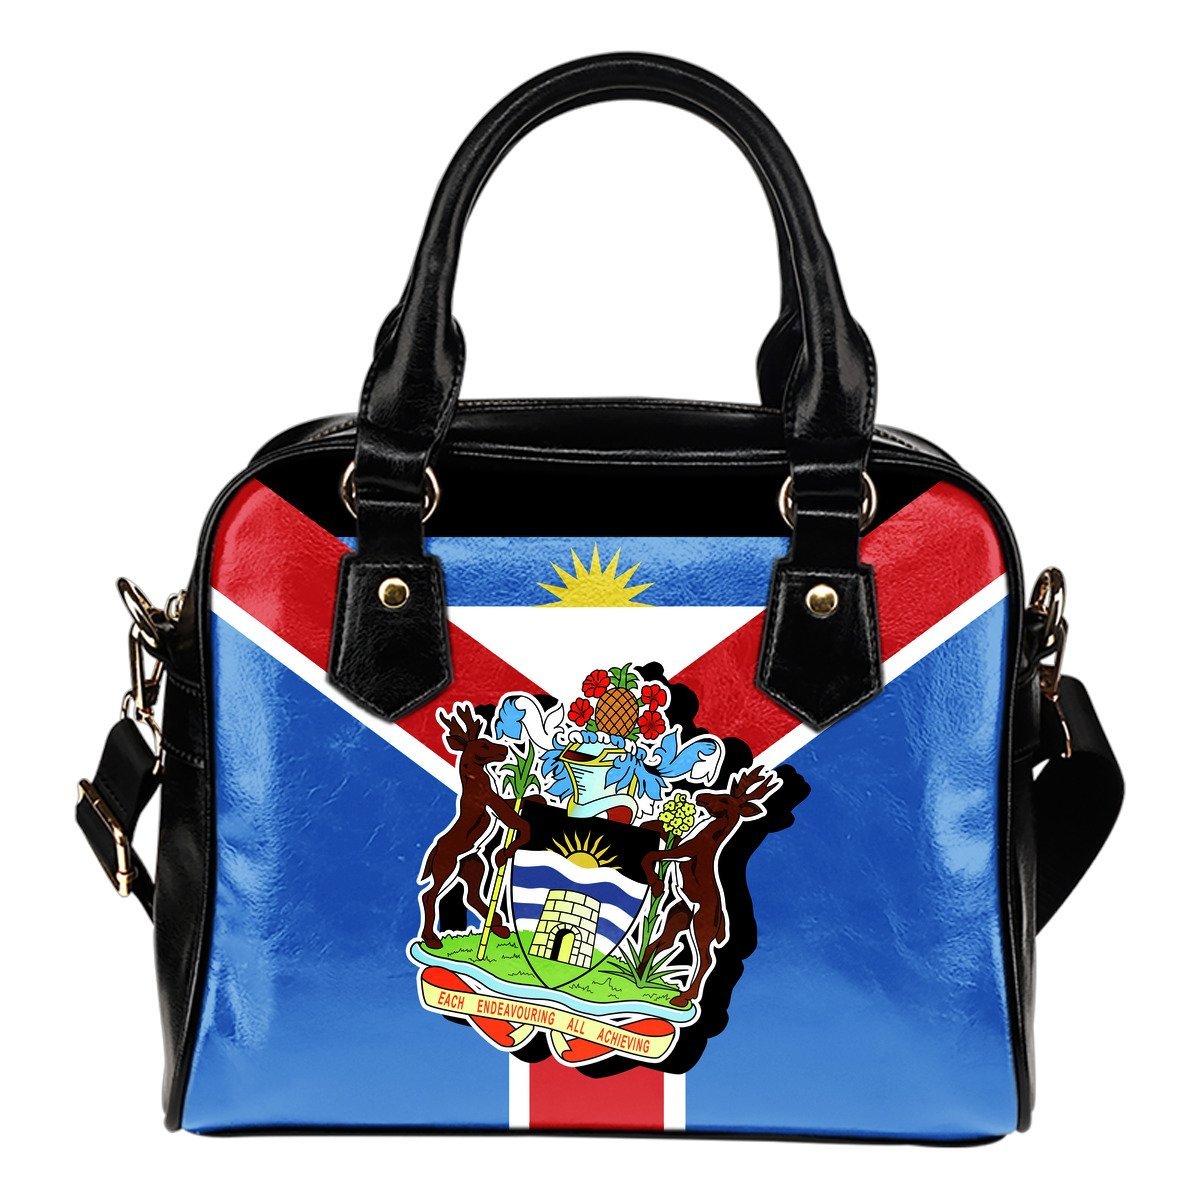 antigua-and-barbuda-handbag-rising